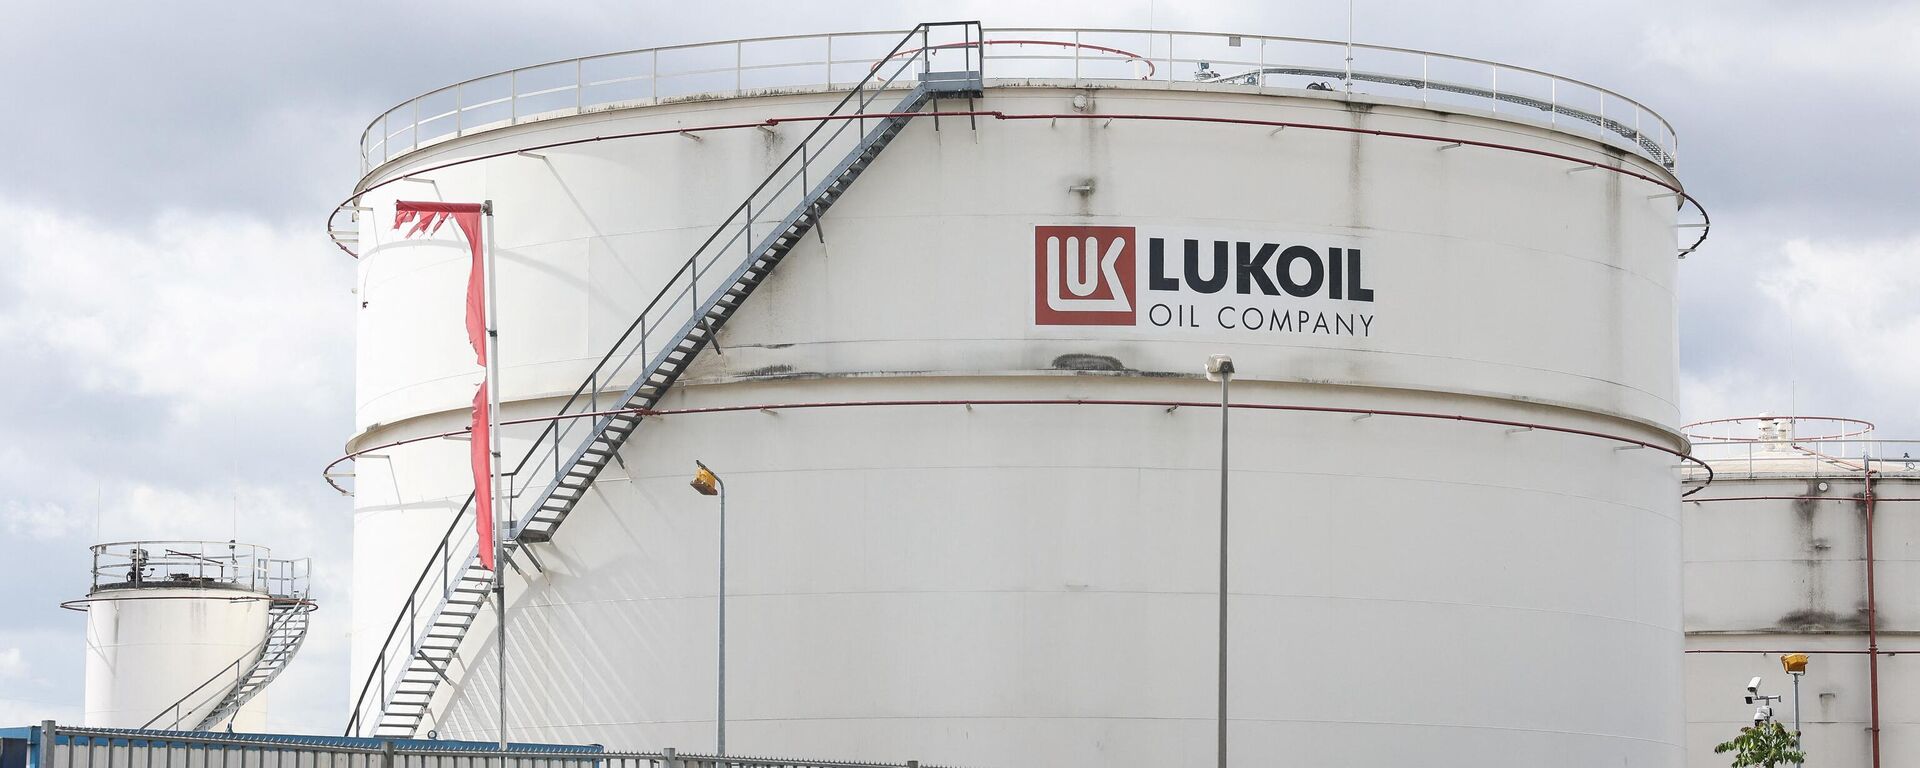 Tanques de armazenamento de combustível da empresa petrolífera russa Lukoil em Bruxelas, Bélgica, 13 de maio de 2022 - Sputnik Brasil, 1920, 19.06.2022